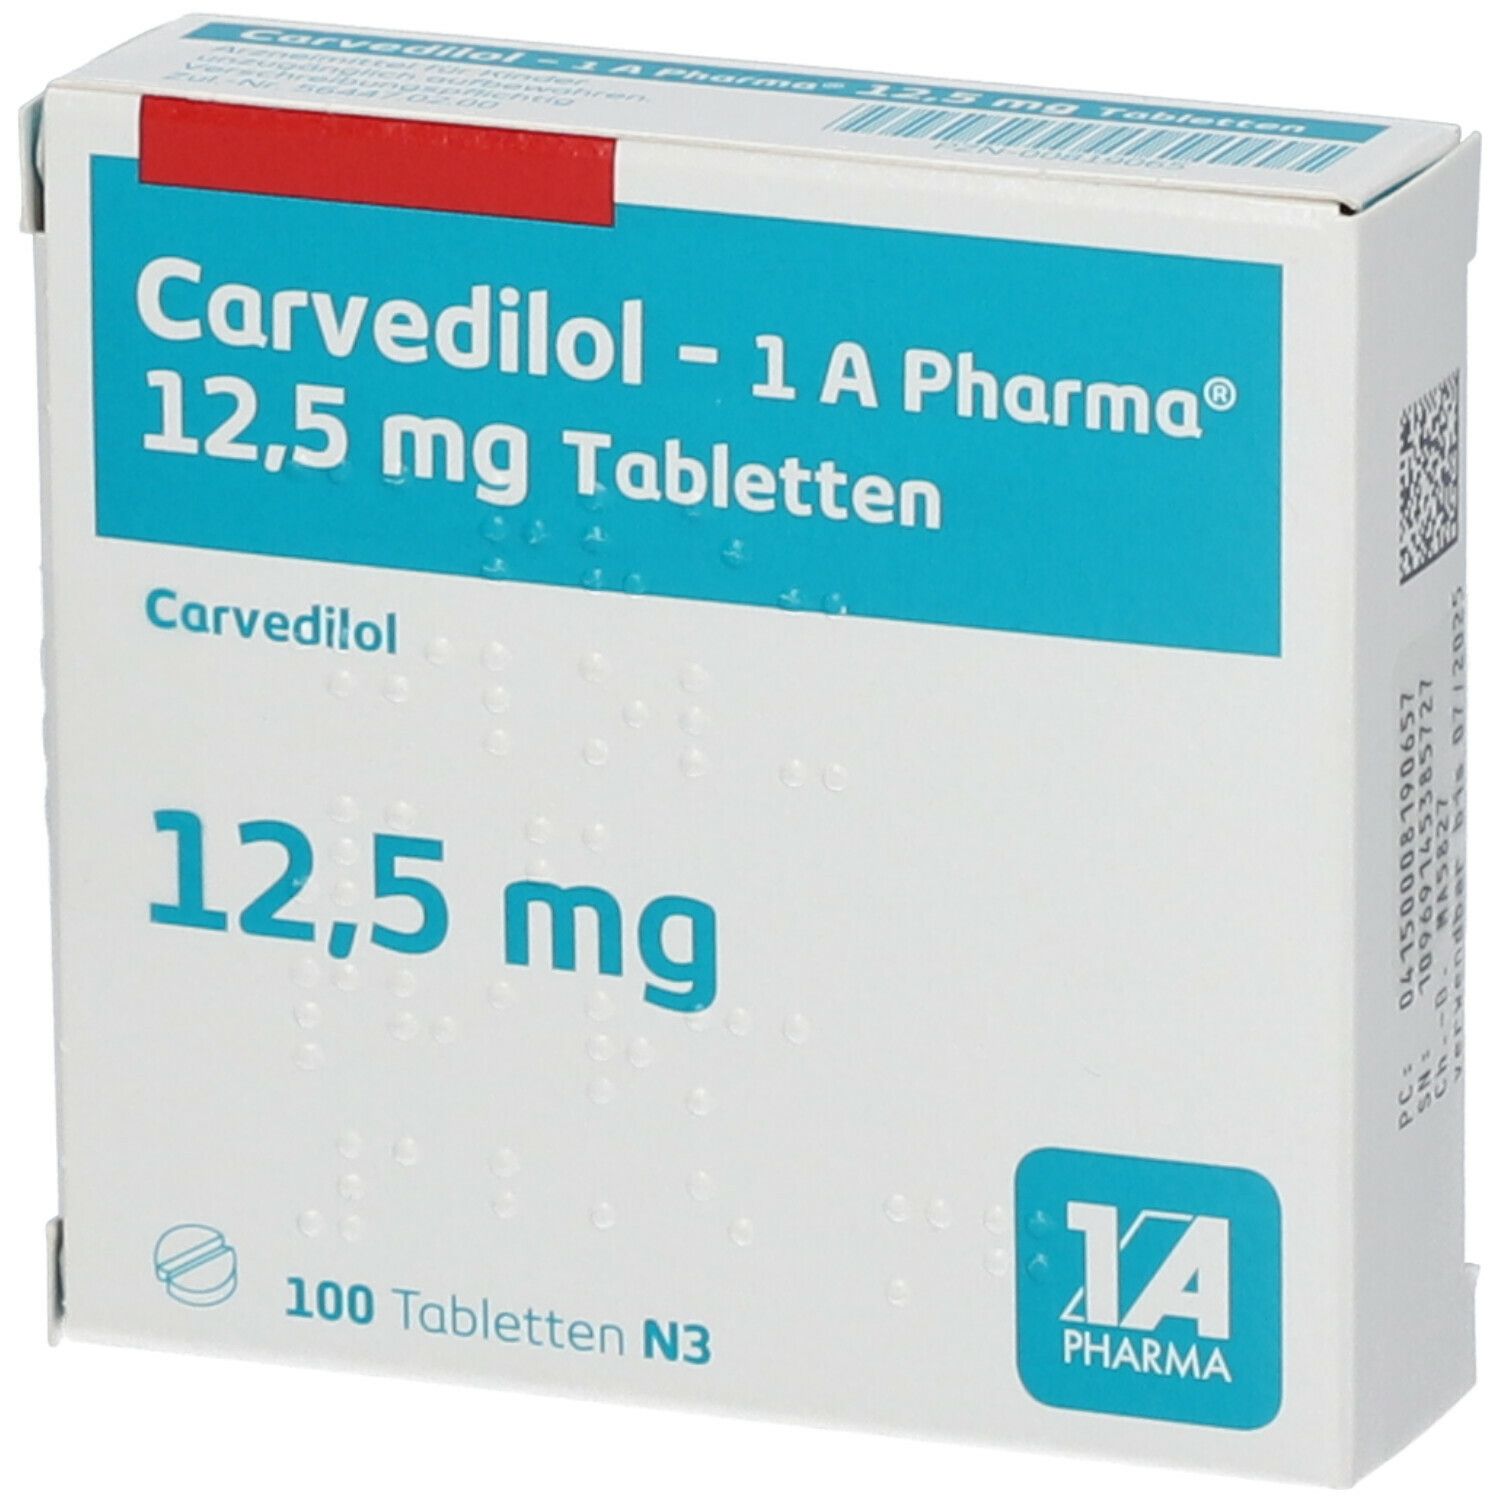 Carvedilol 1A Pharma® 12.5